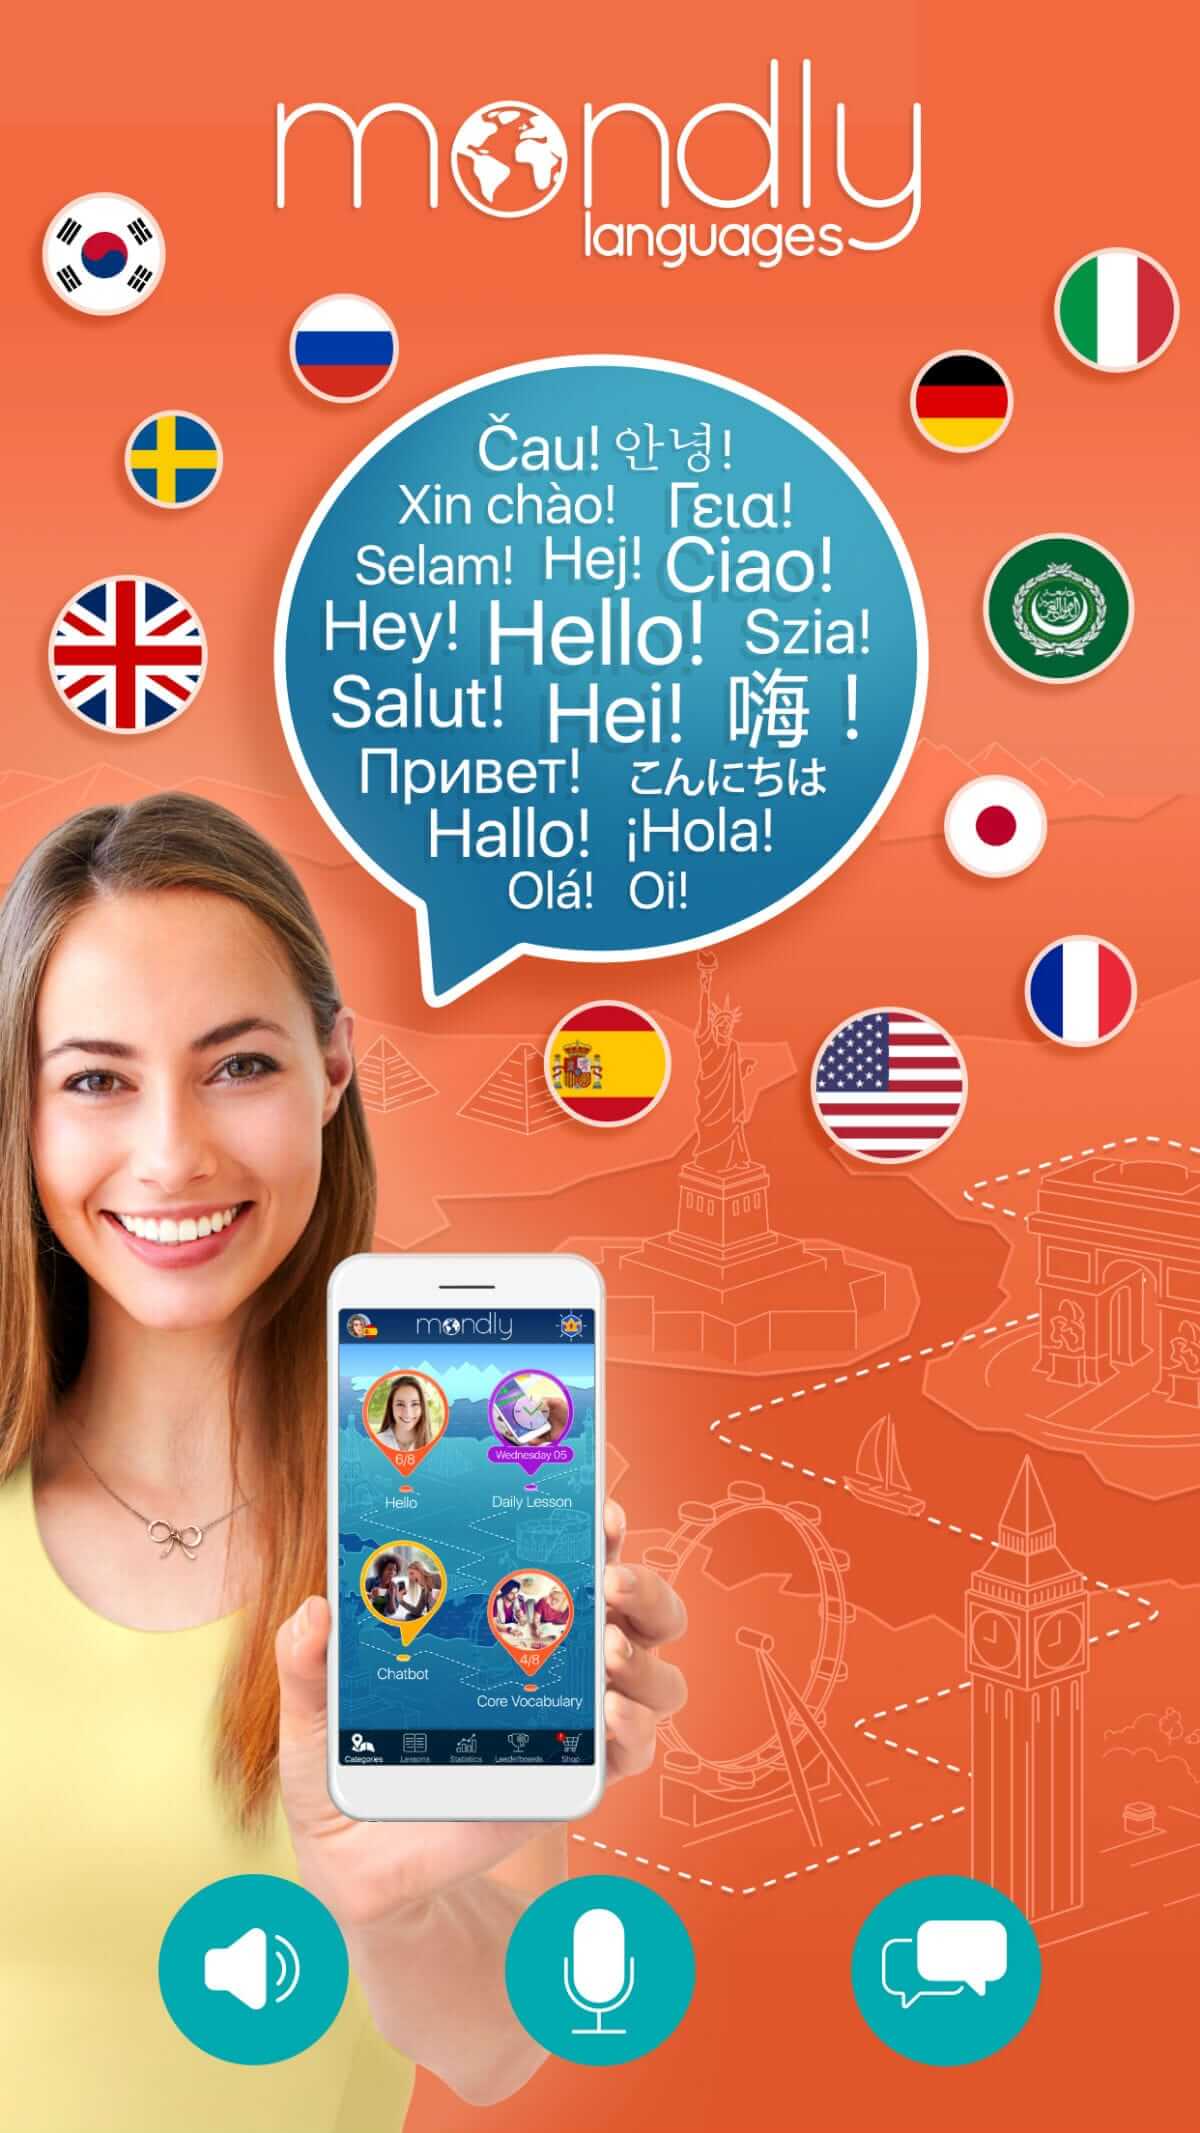 App On Mac To Learn Spanish